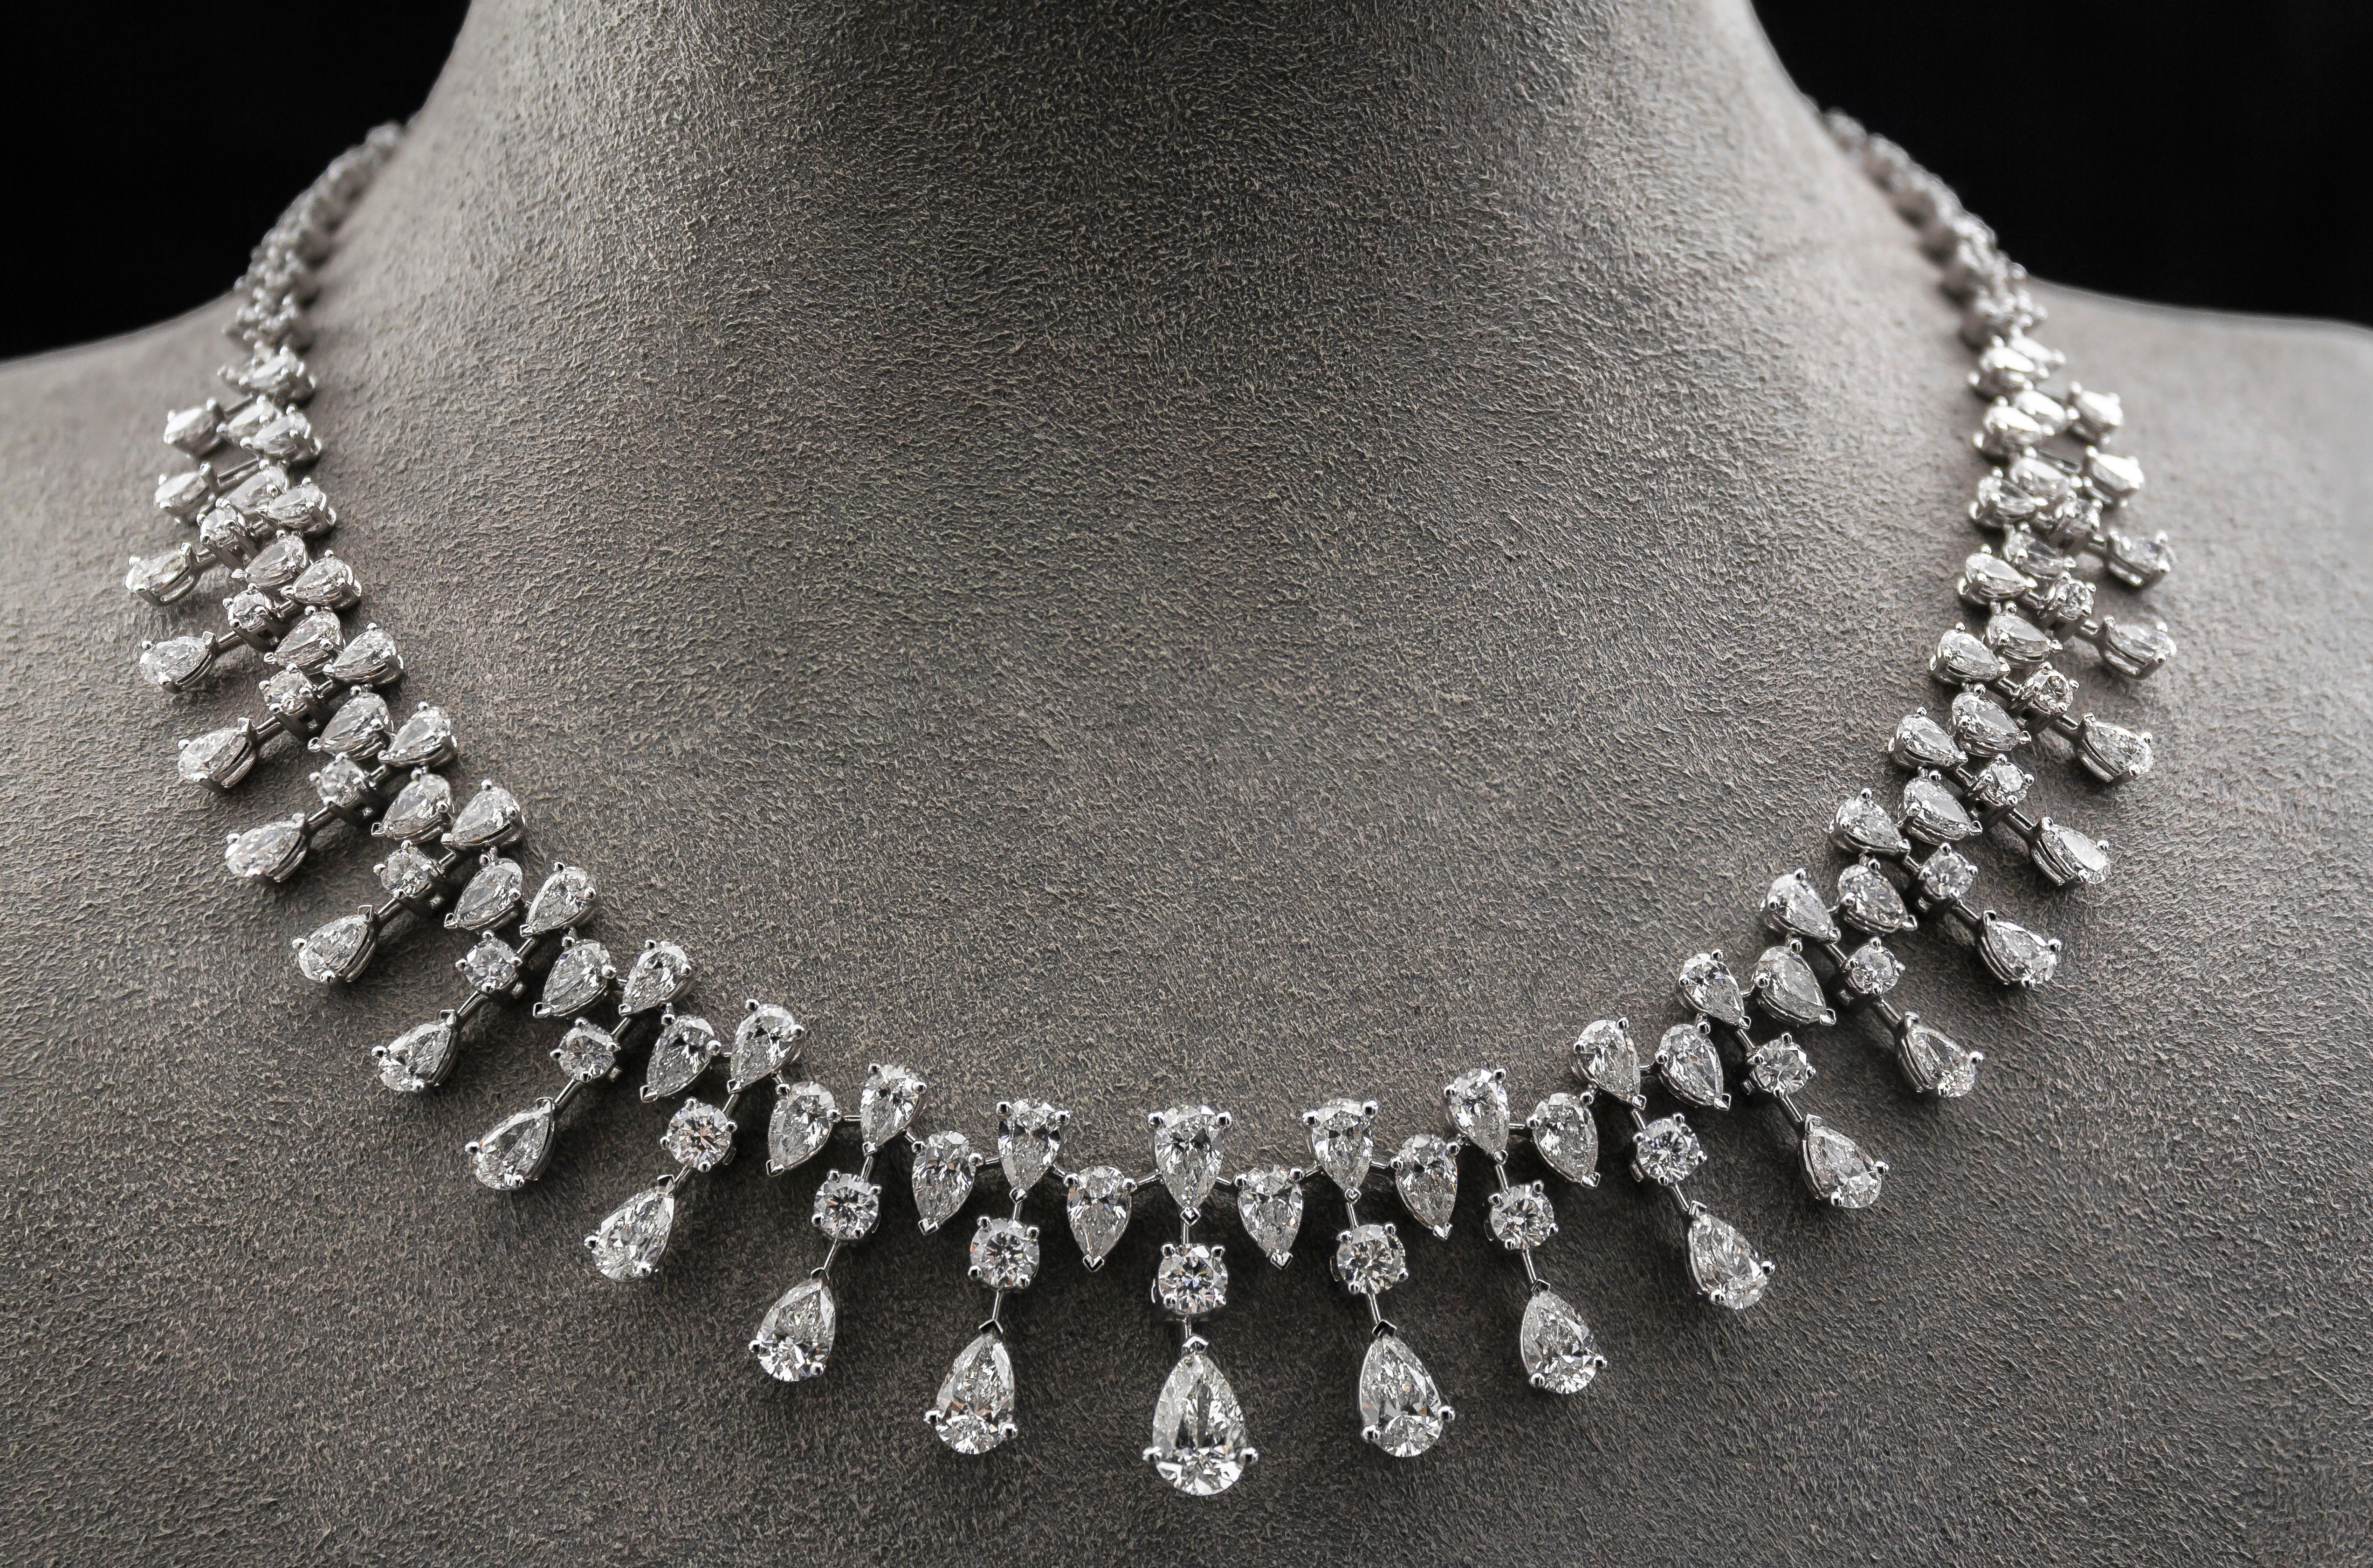 Roman Malakov 25.60 Carats Total Mixed Cut Graduating Diamonds Necklace For Sale 1